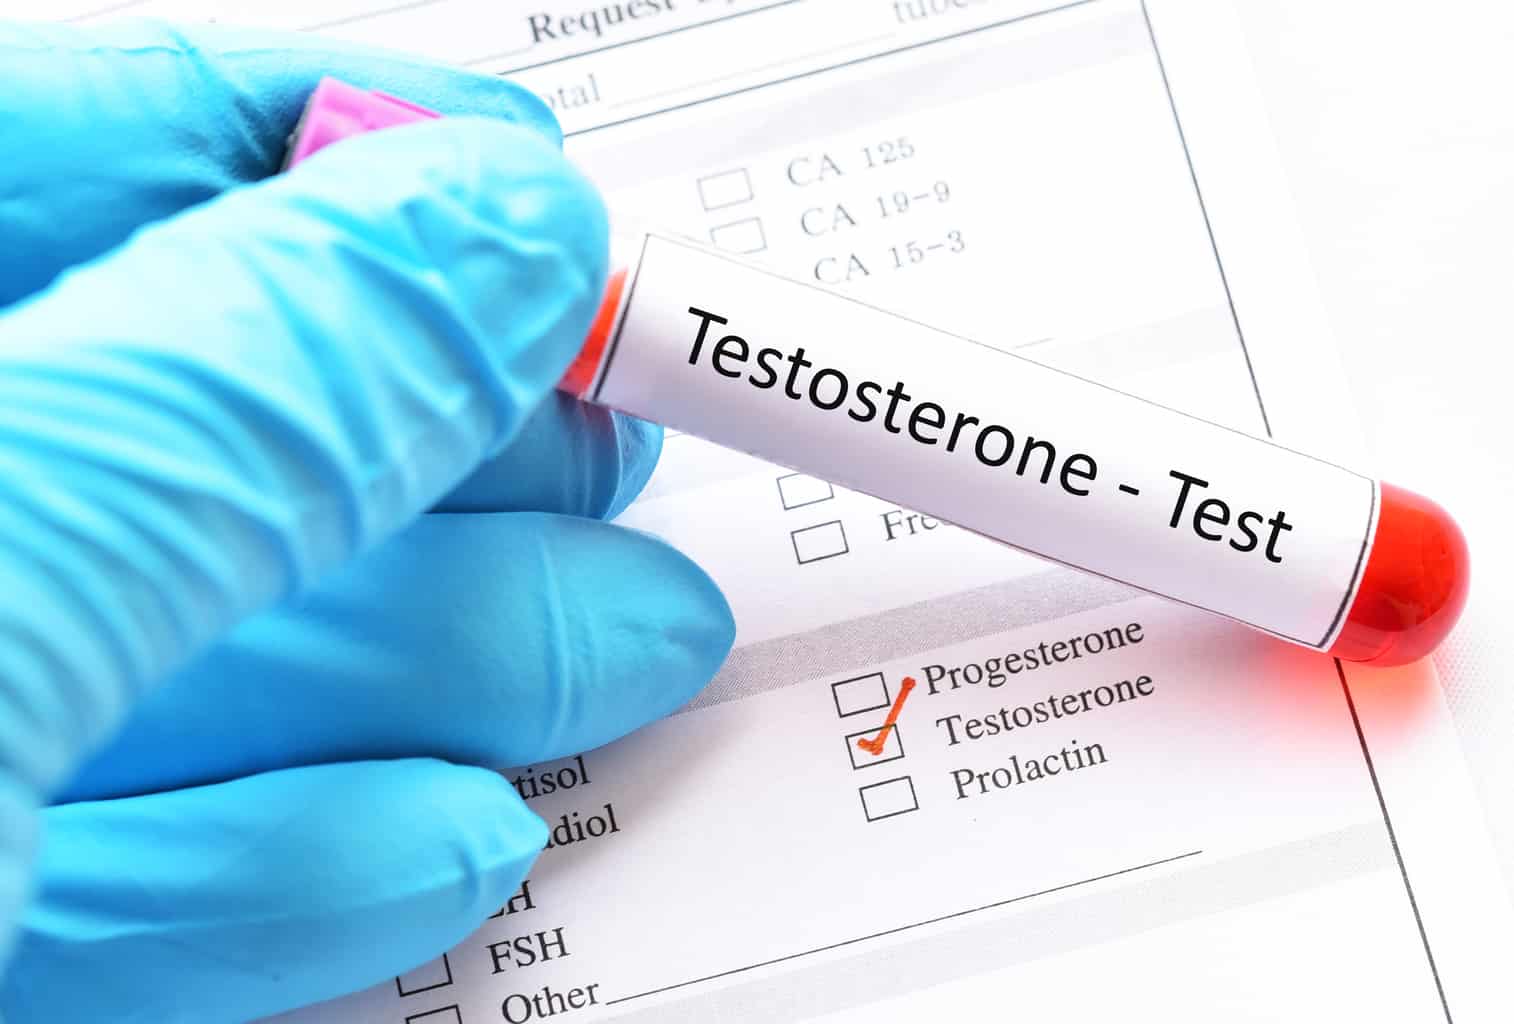 A 44% testosterone boost